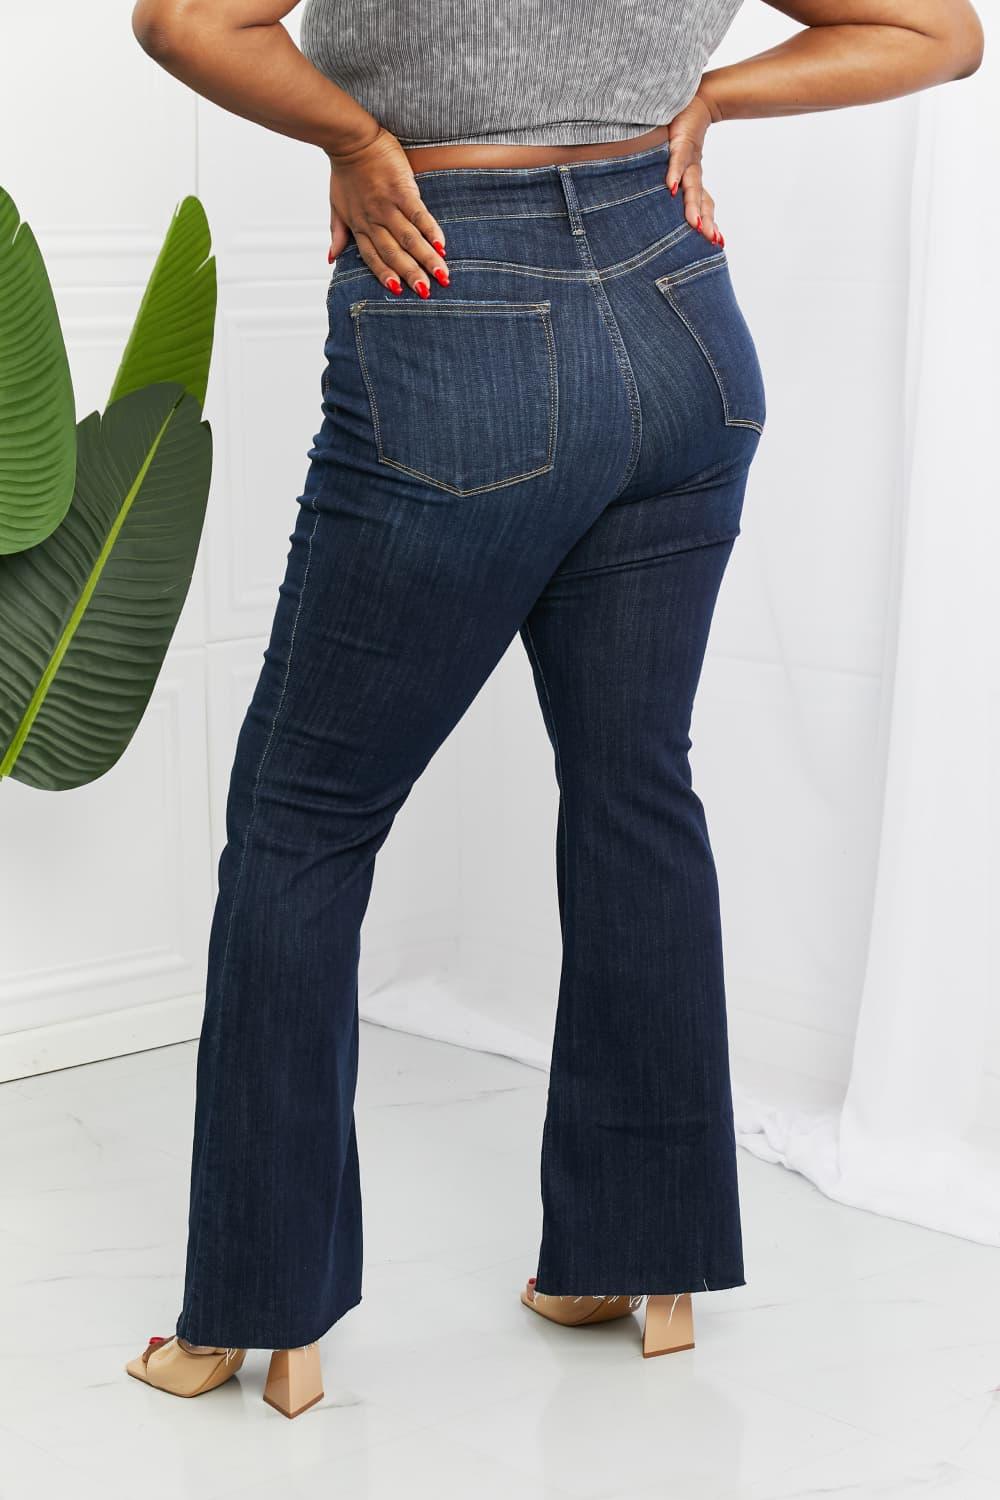 Judy Blue Tiffany Full Size Mid Rise Flare Jeans - The Fiery Jasmine